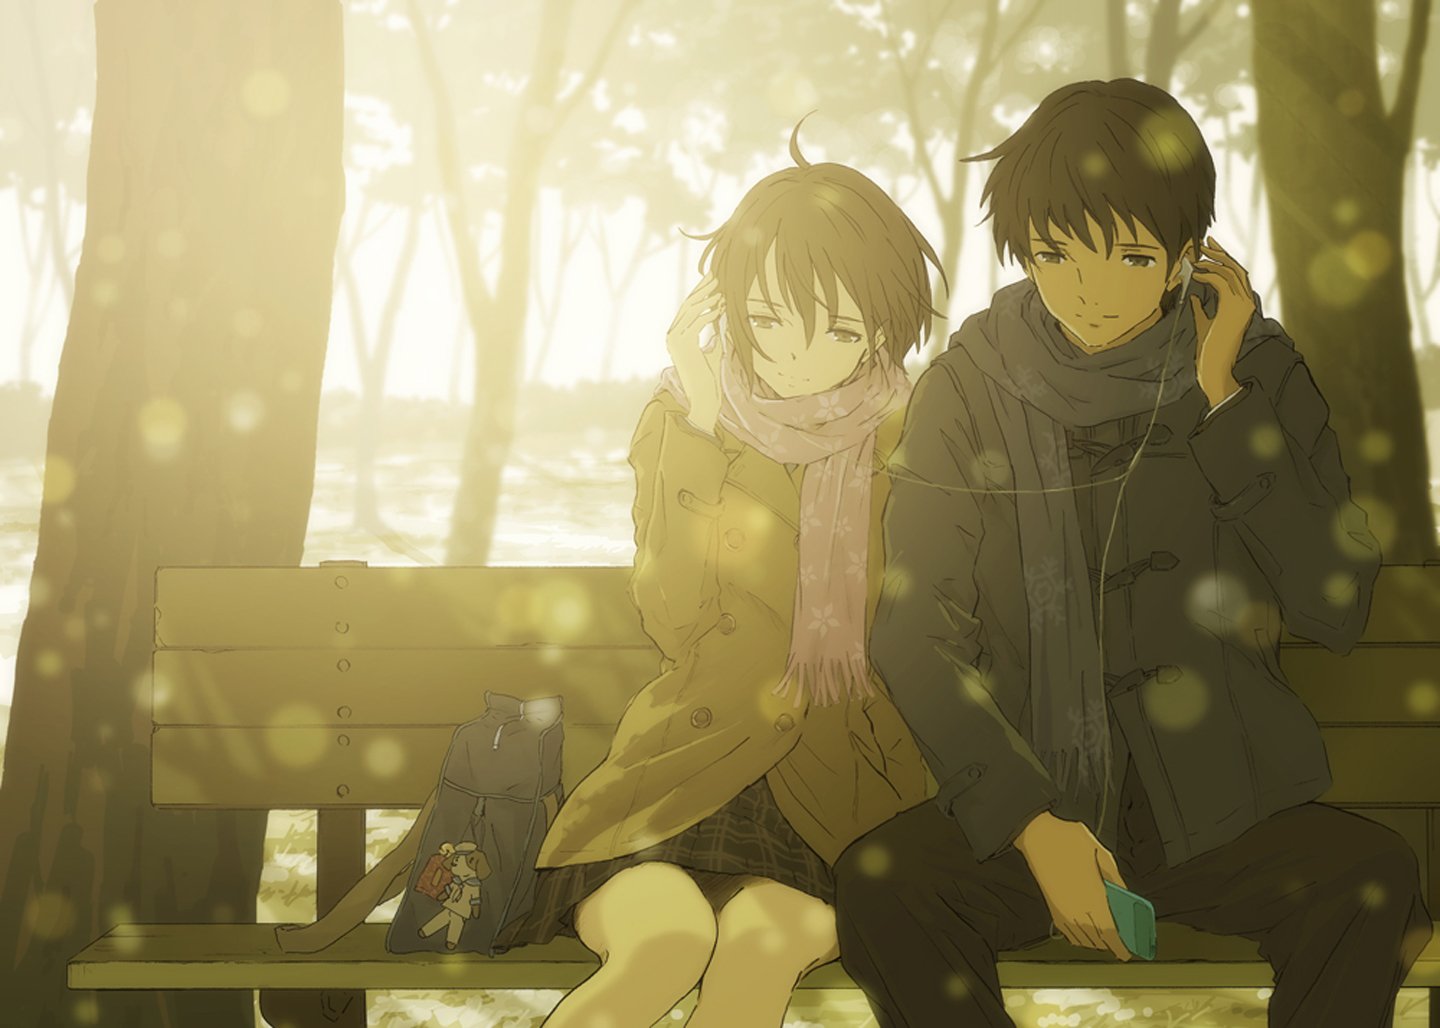 anime, Love, Couple, Music, Headphone, Tree, Winter, Sunshine, Romantic  Wallpapers HD / Desktop and Mobile Backgrounds